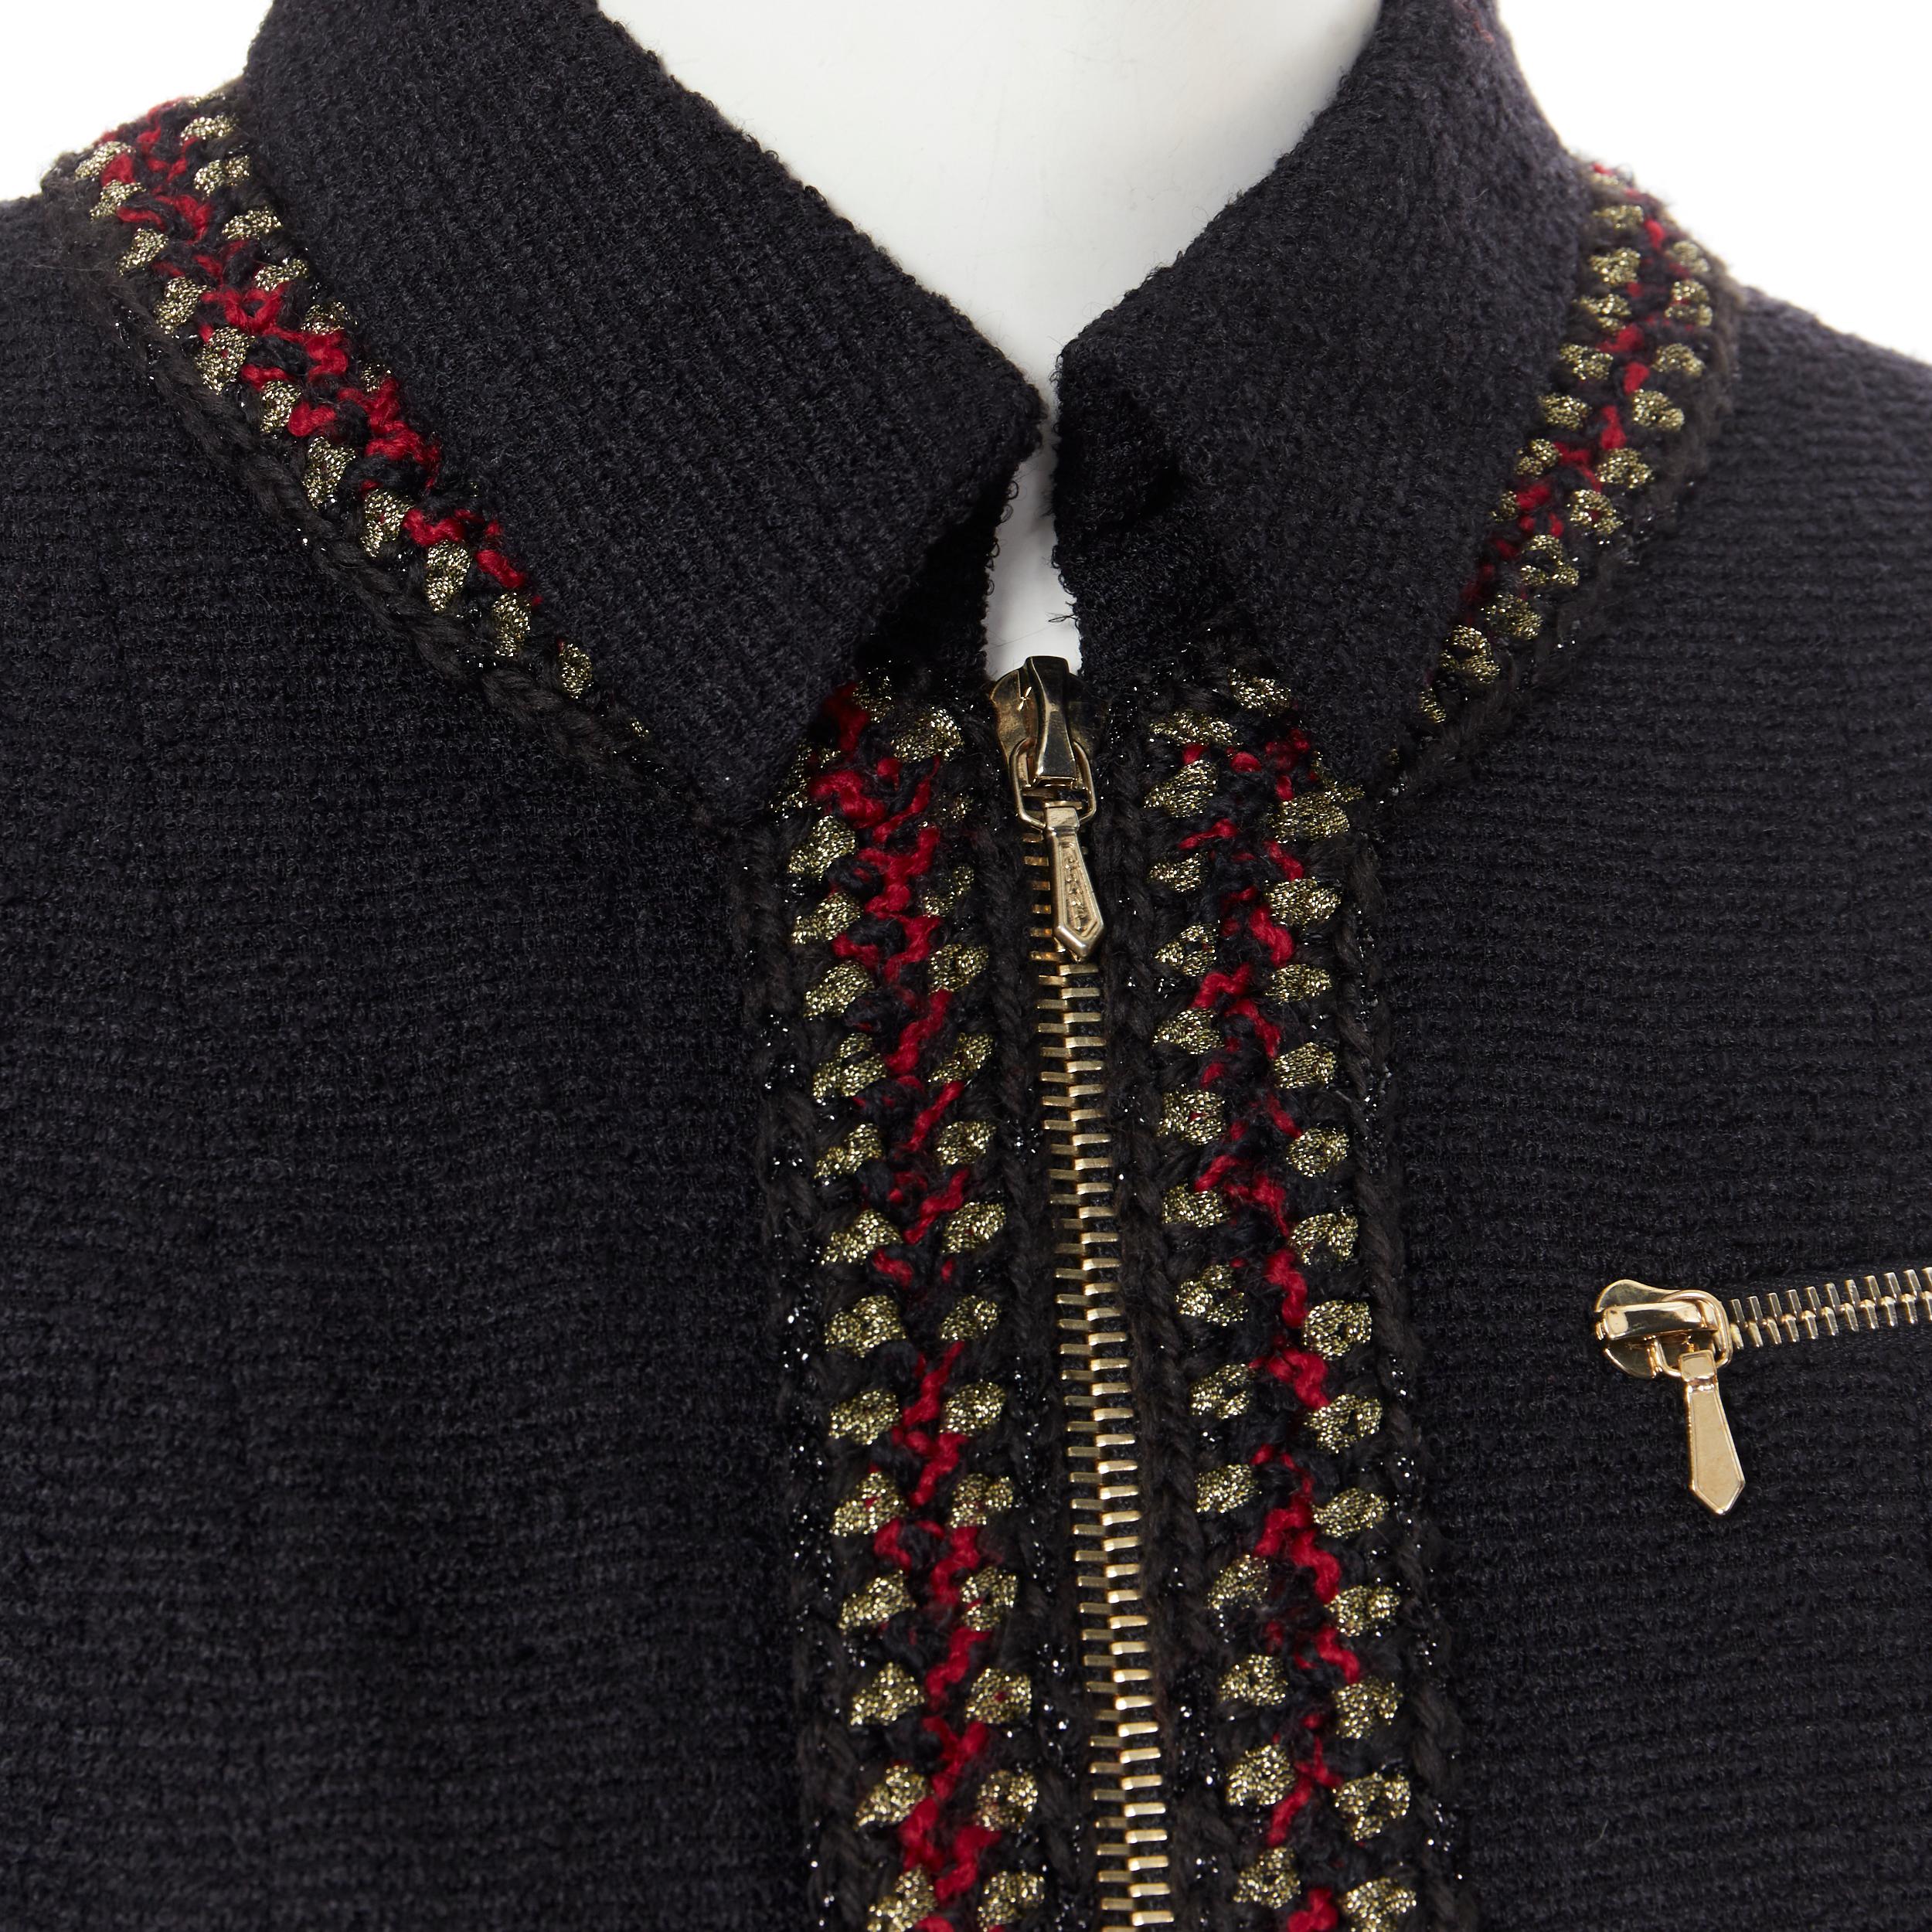 runway CHANEL 10A Paris-Shanghai black tweed red gold crochet trim jacket FR36
Brand: Chanel
Designer: Karl Lagerfeld
Collection: Paris-Shanghai Metier D'art 
Model Name / Style: Tweed jacket
Material: Wool blend
Color: Black
Pattern: Solid
Closure: